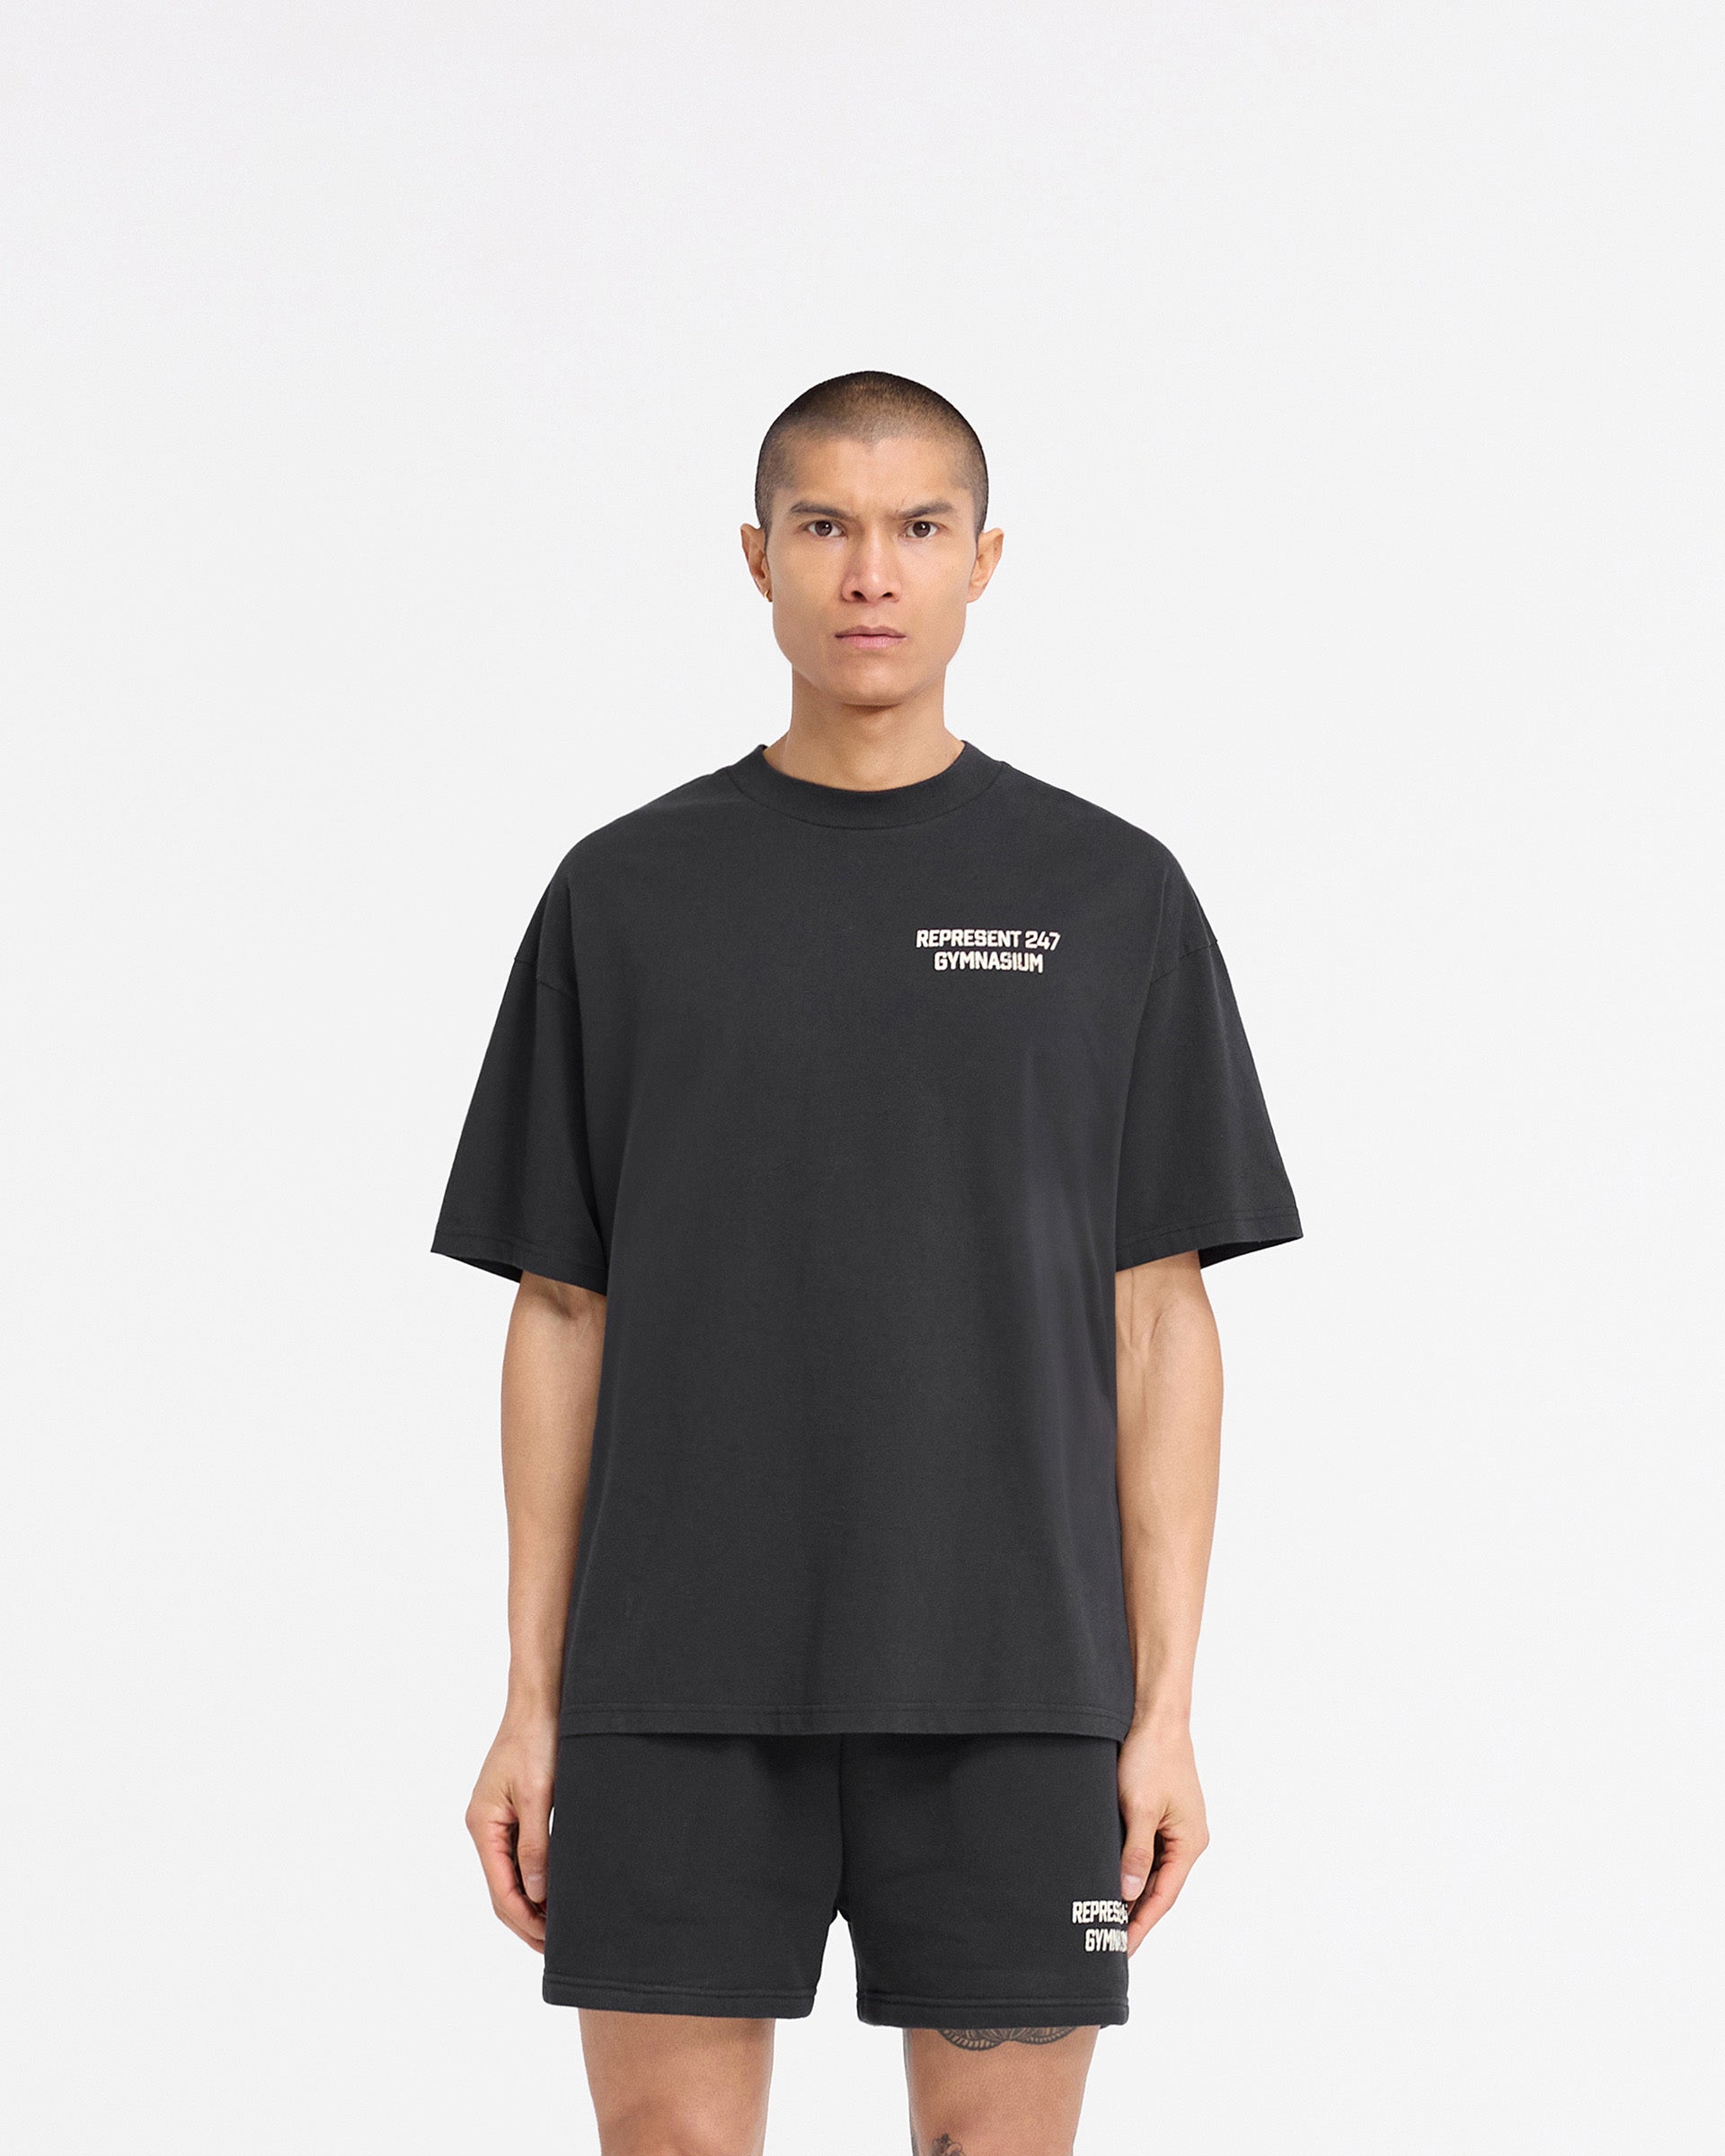 247 Gymnasium T-Shirt - Off Black